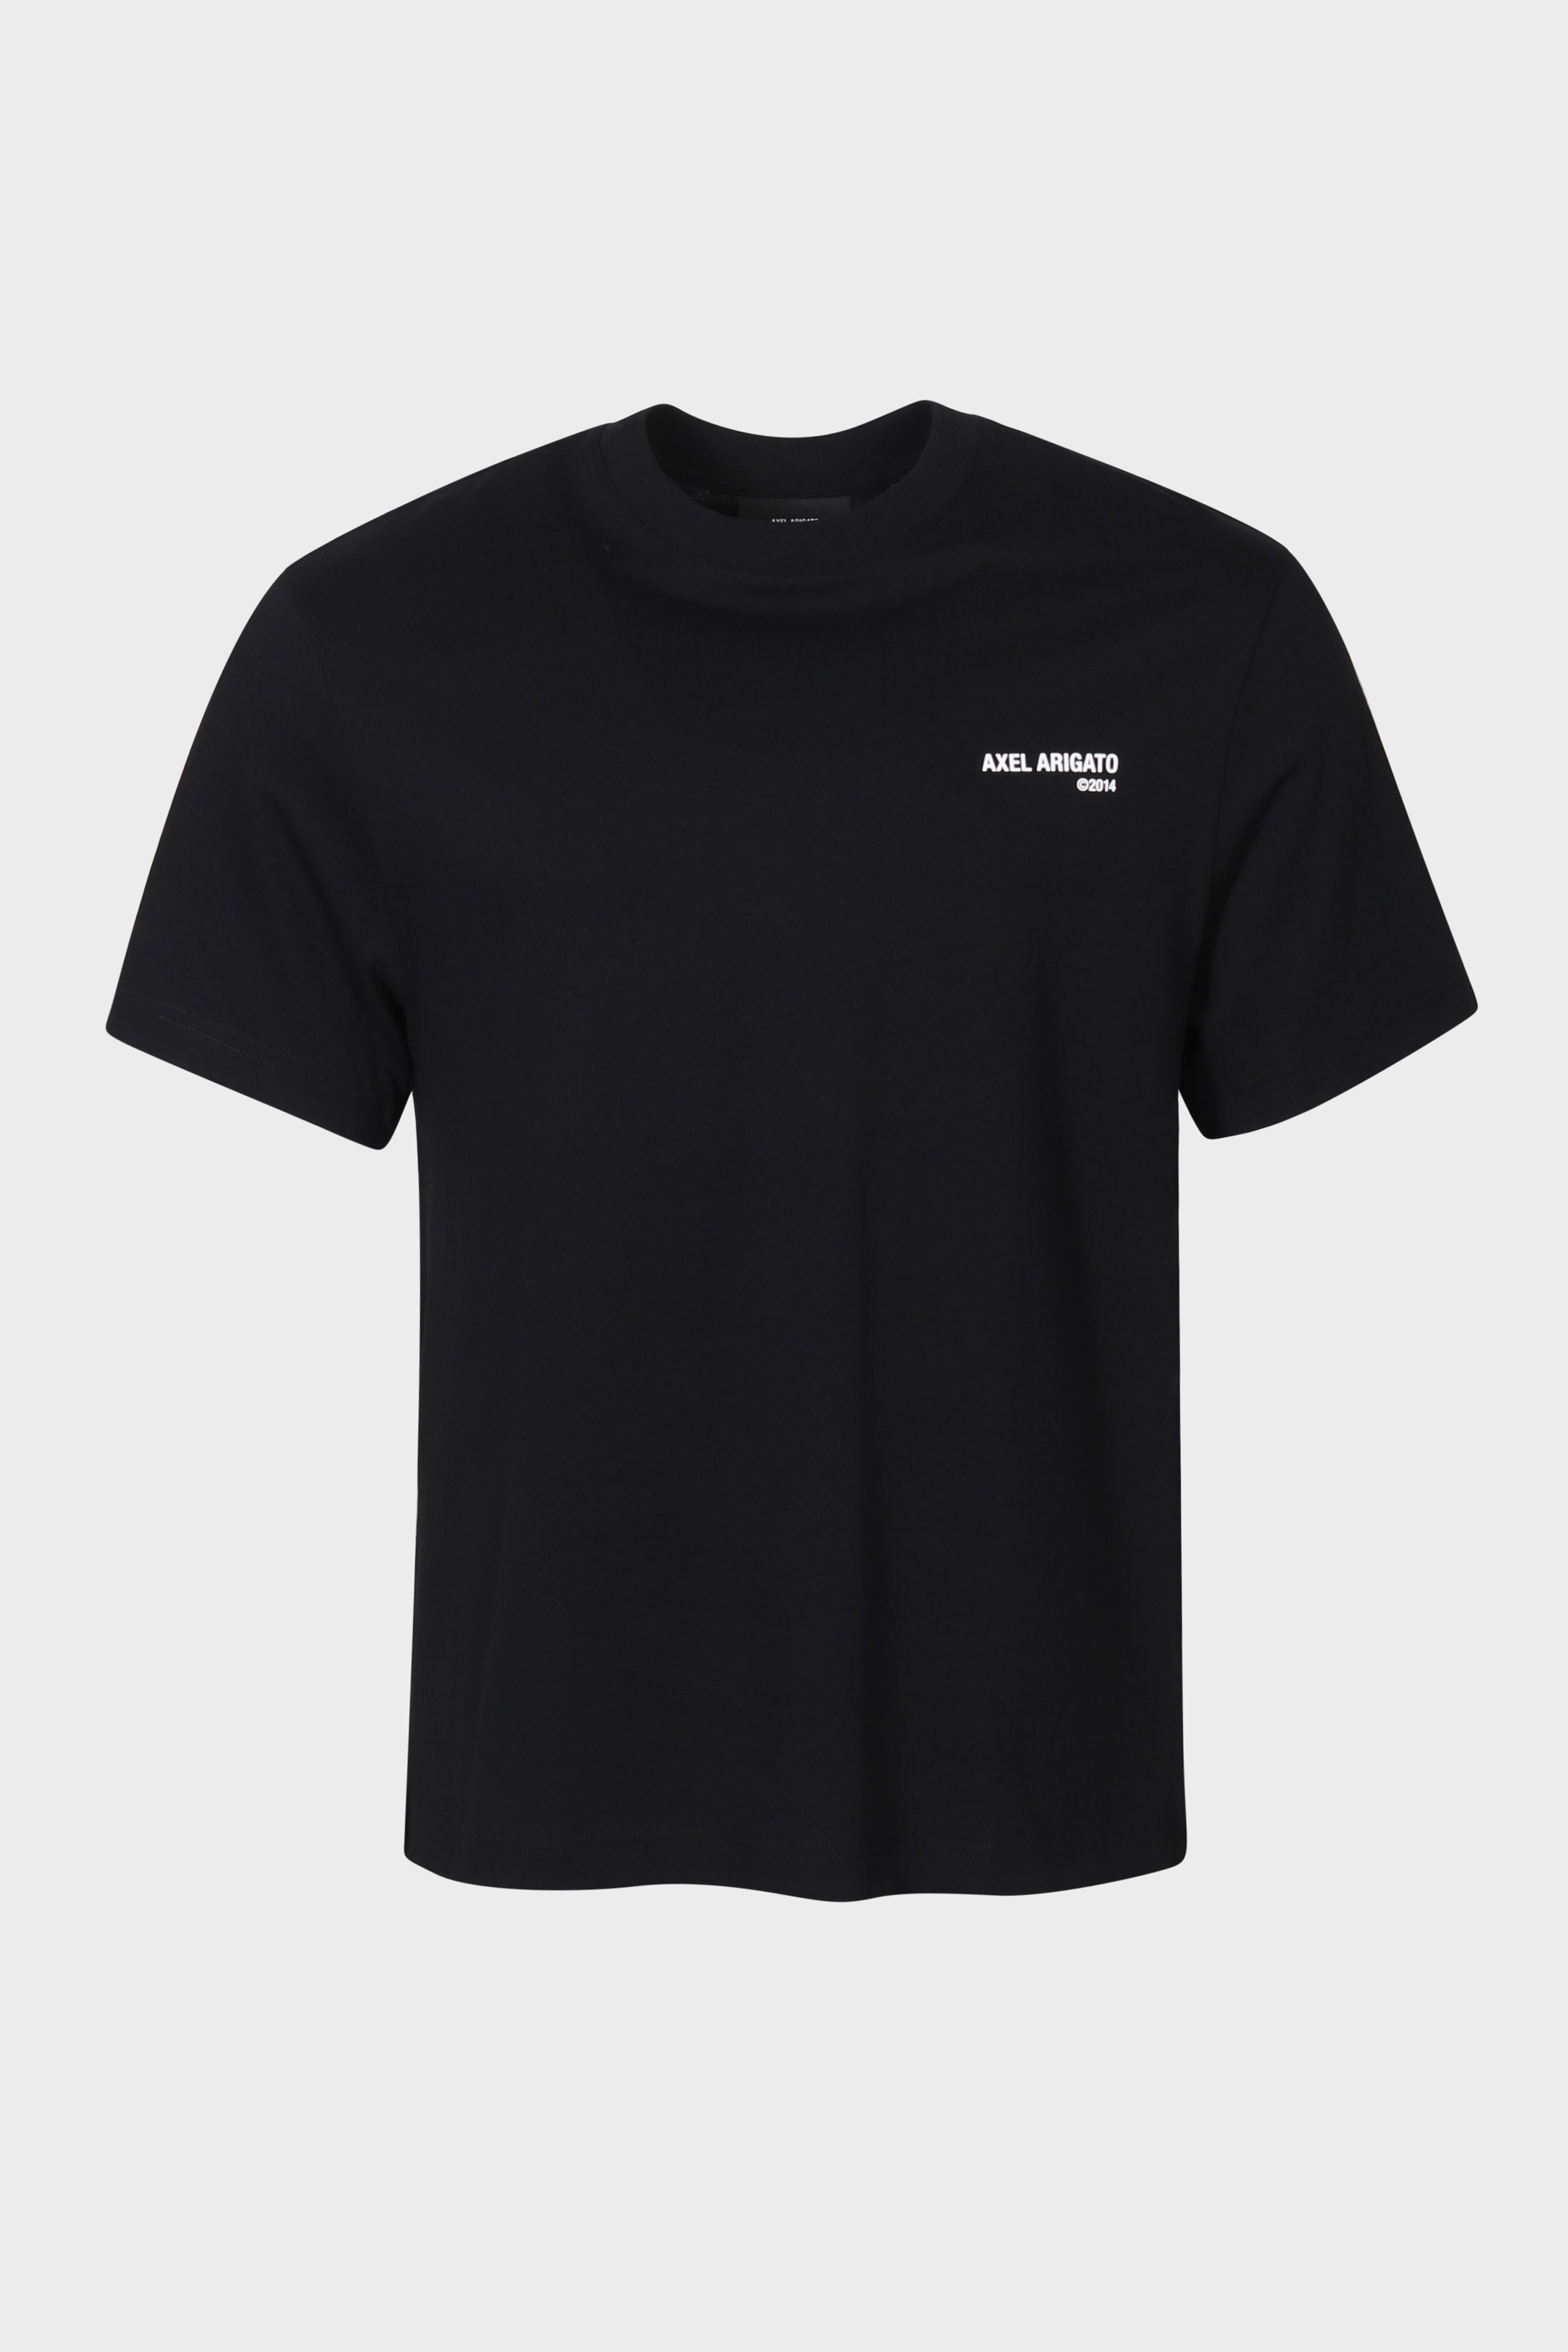 AXEL ARIGATO Legacy T-Shirt in Black